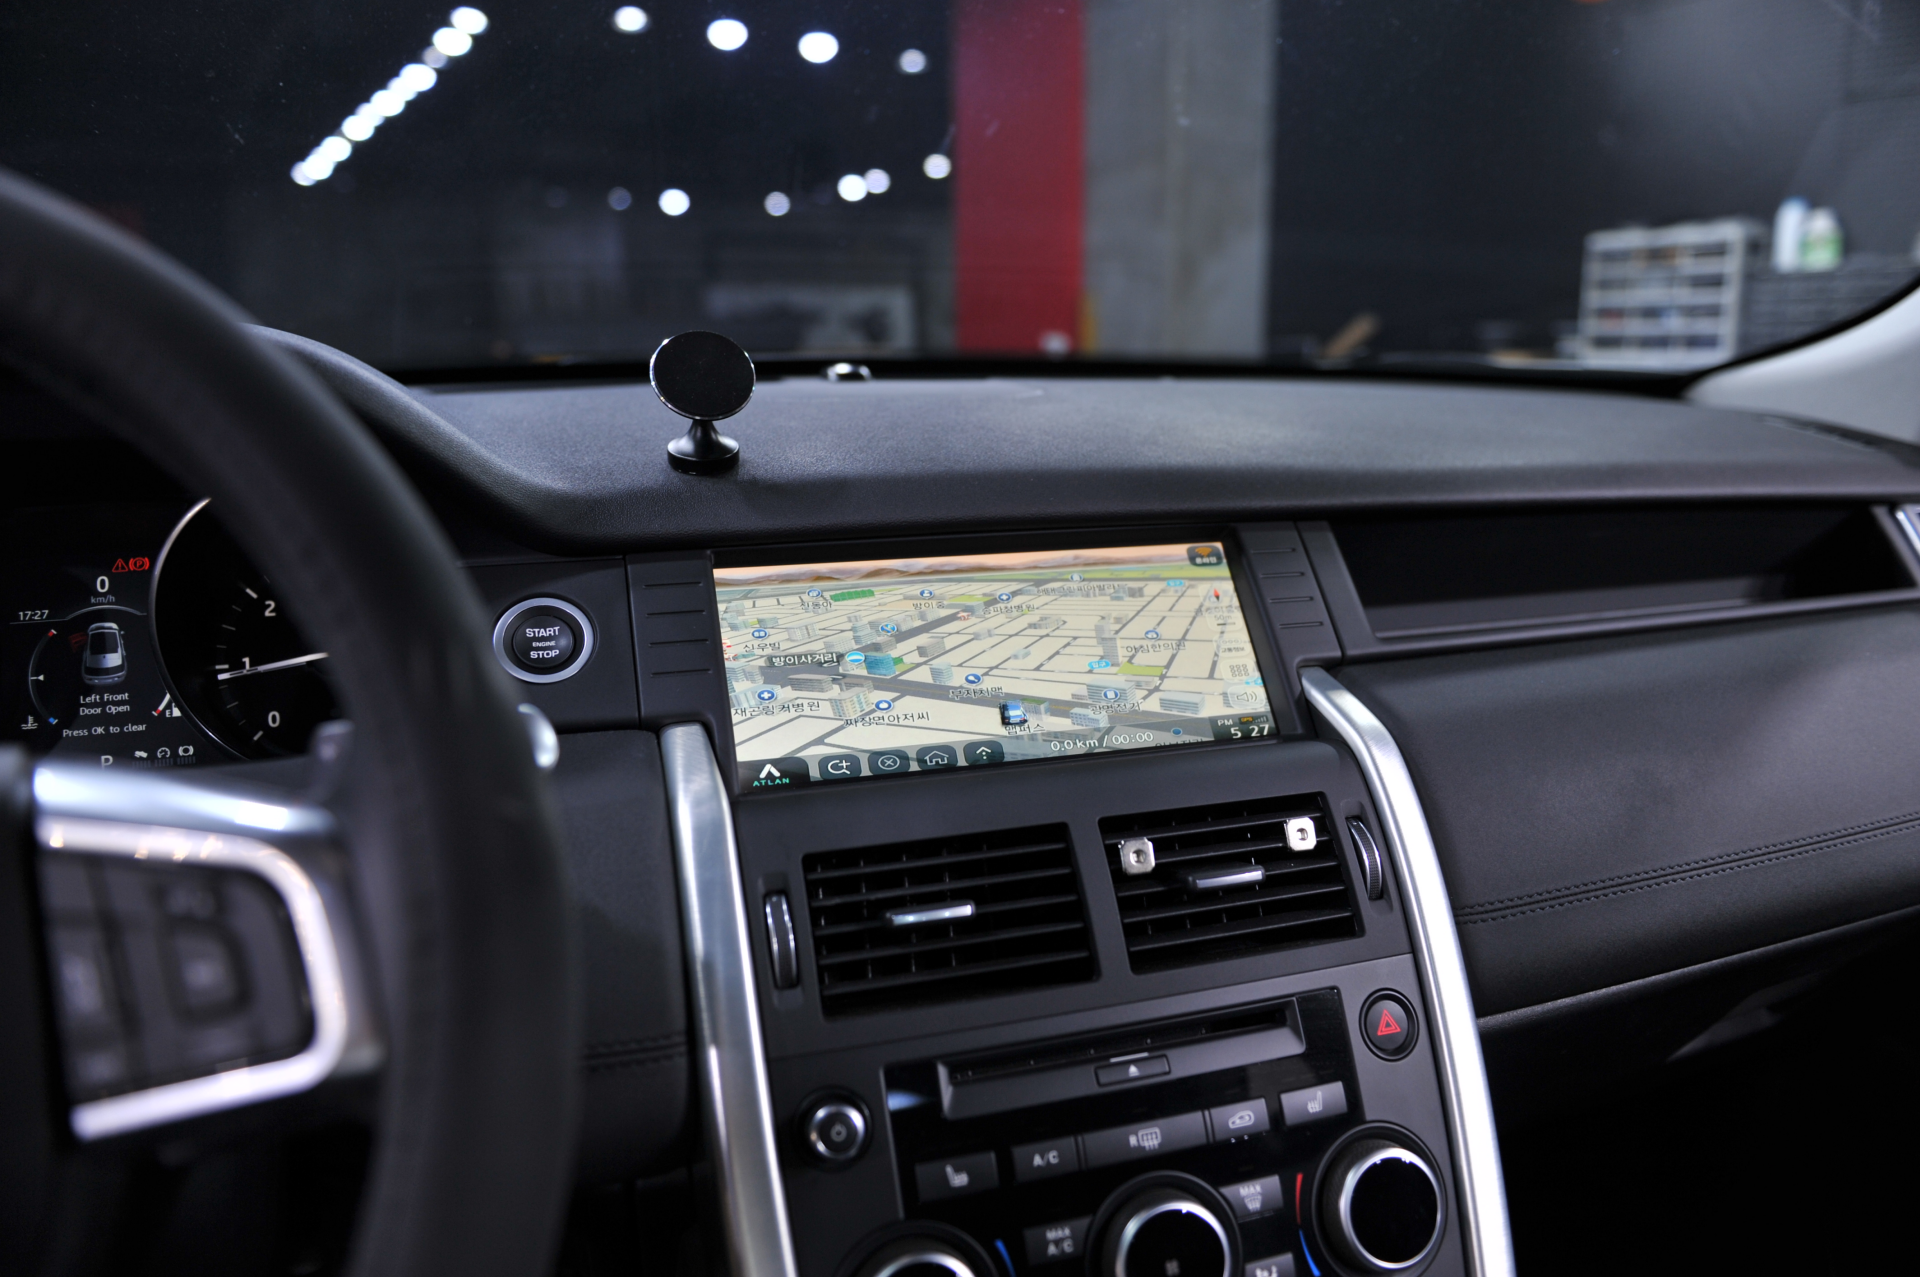 Android System for Land Rover, Jaguar HD-LINK "IW-LR-N23" "M2C-100"